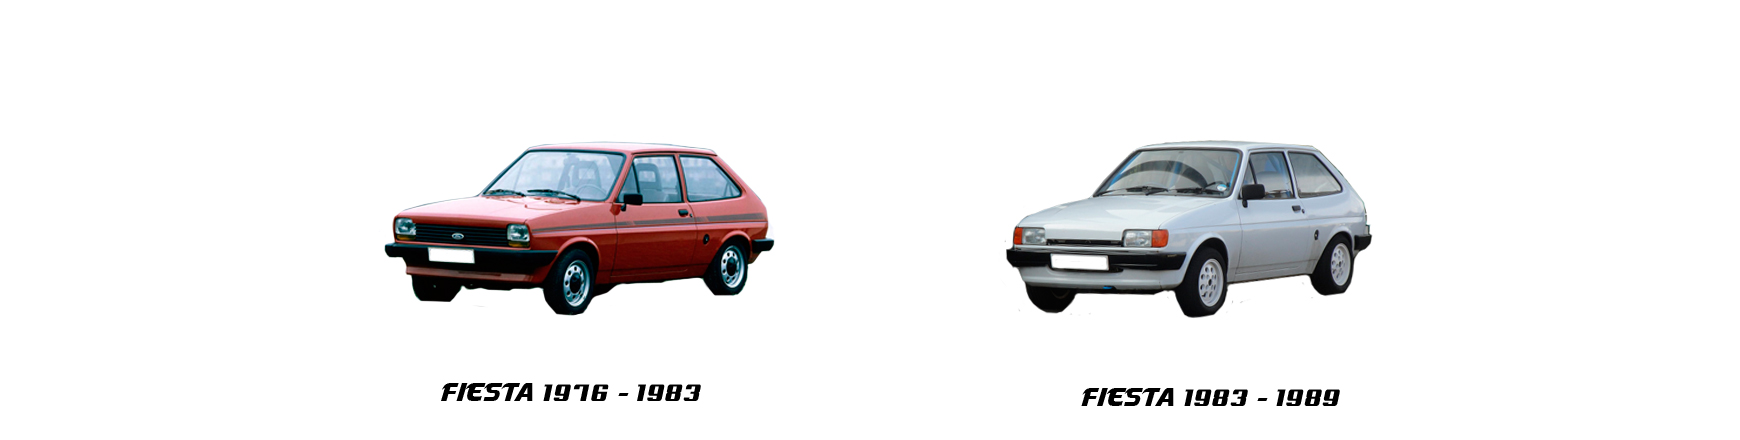 Recambios de Ford Fiesta de 1976 a 1989